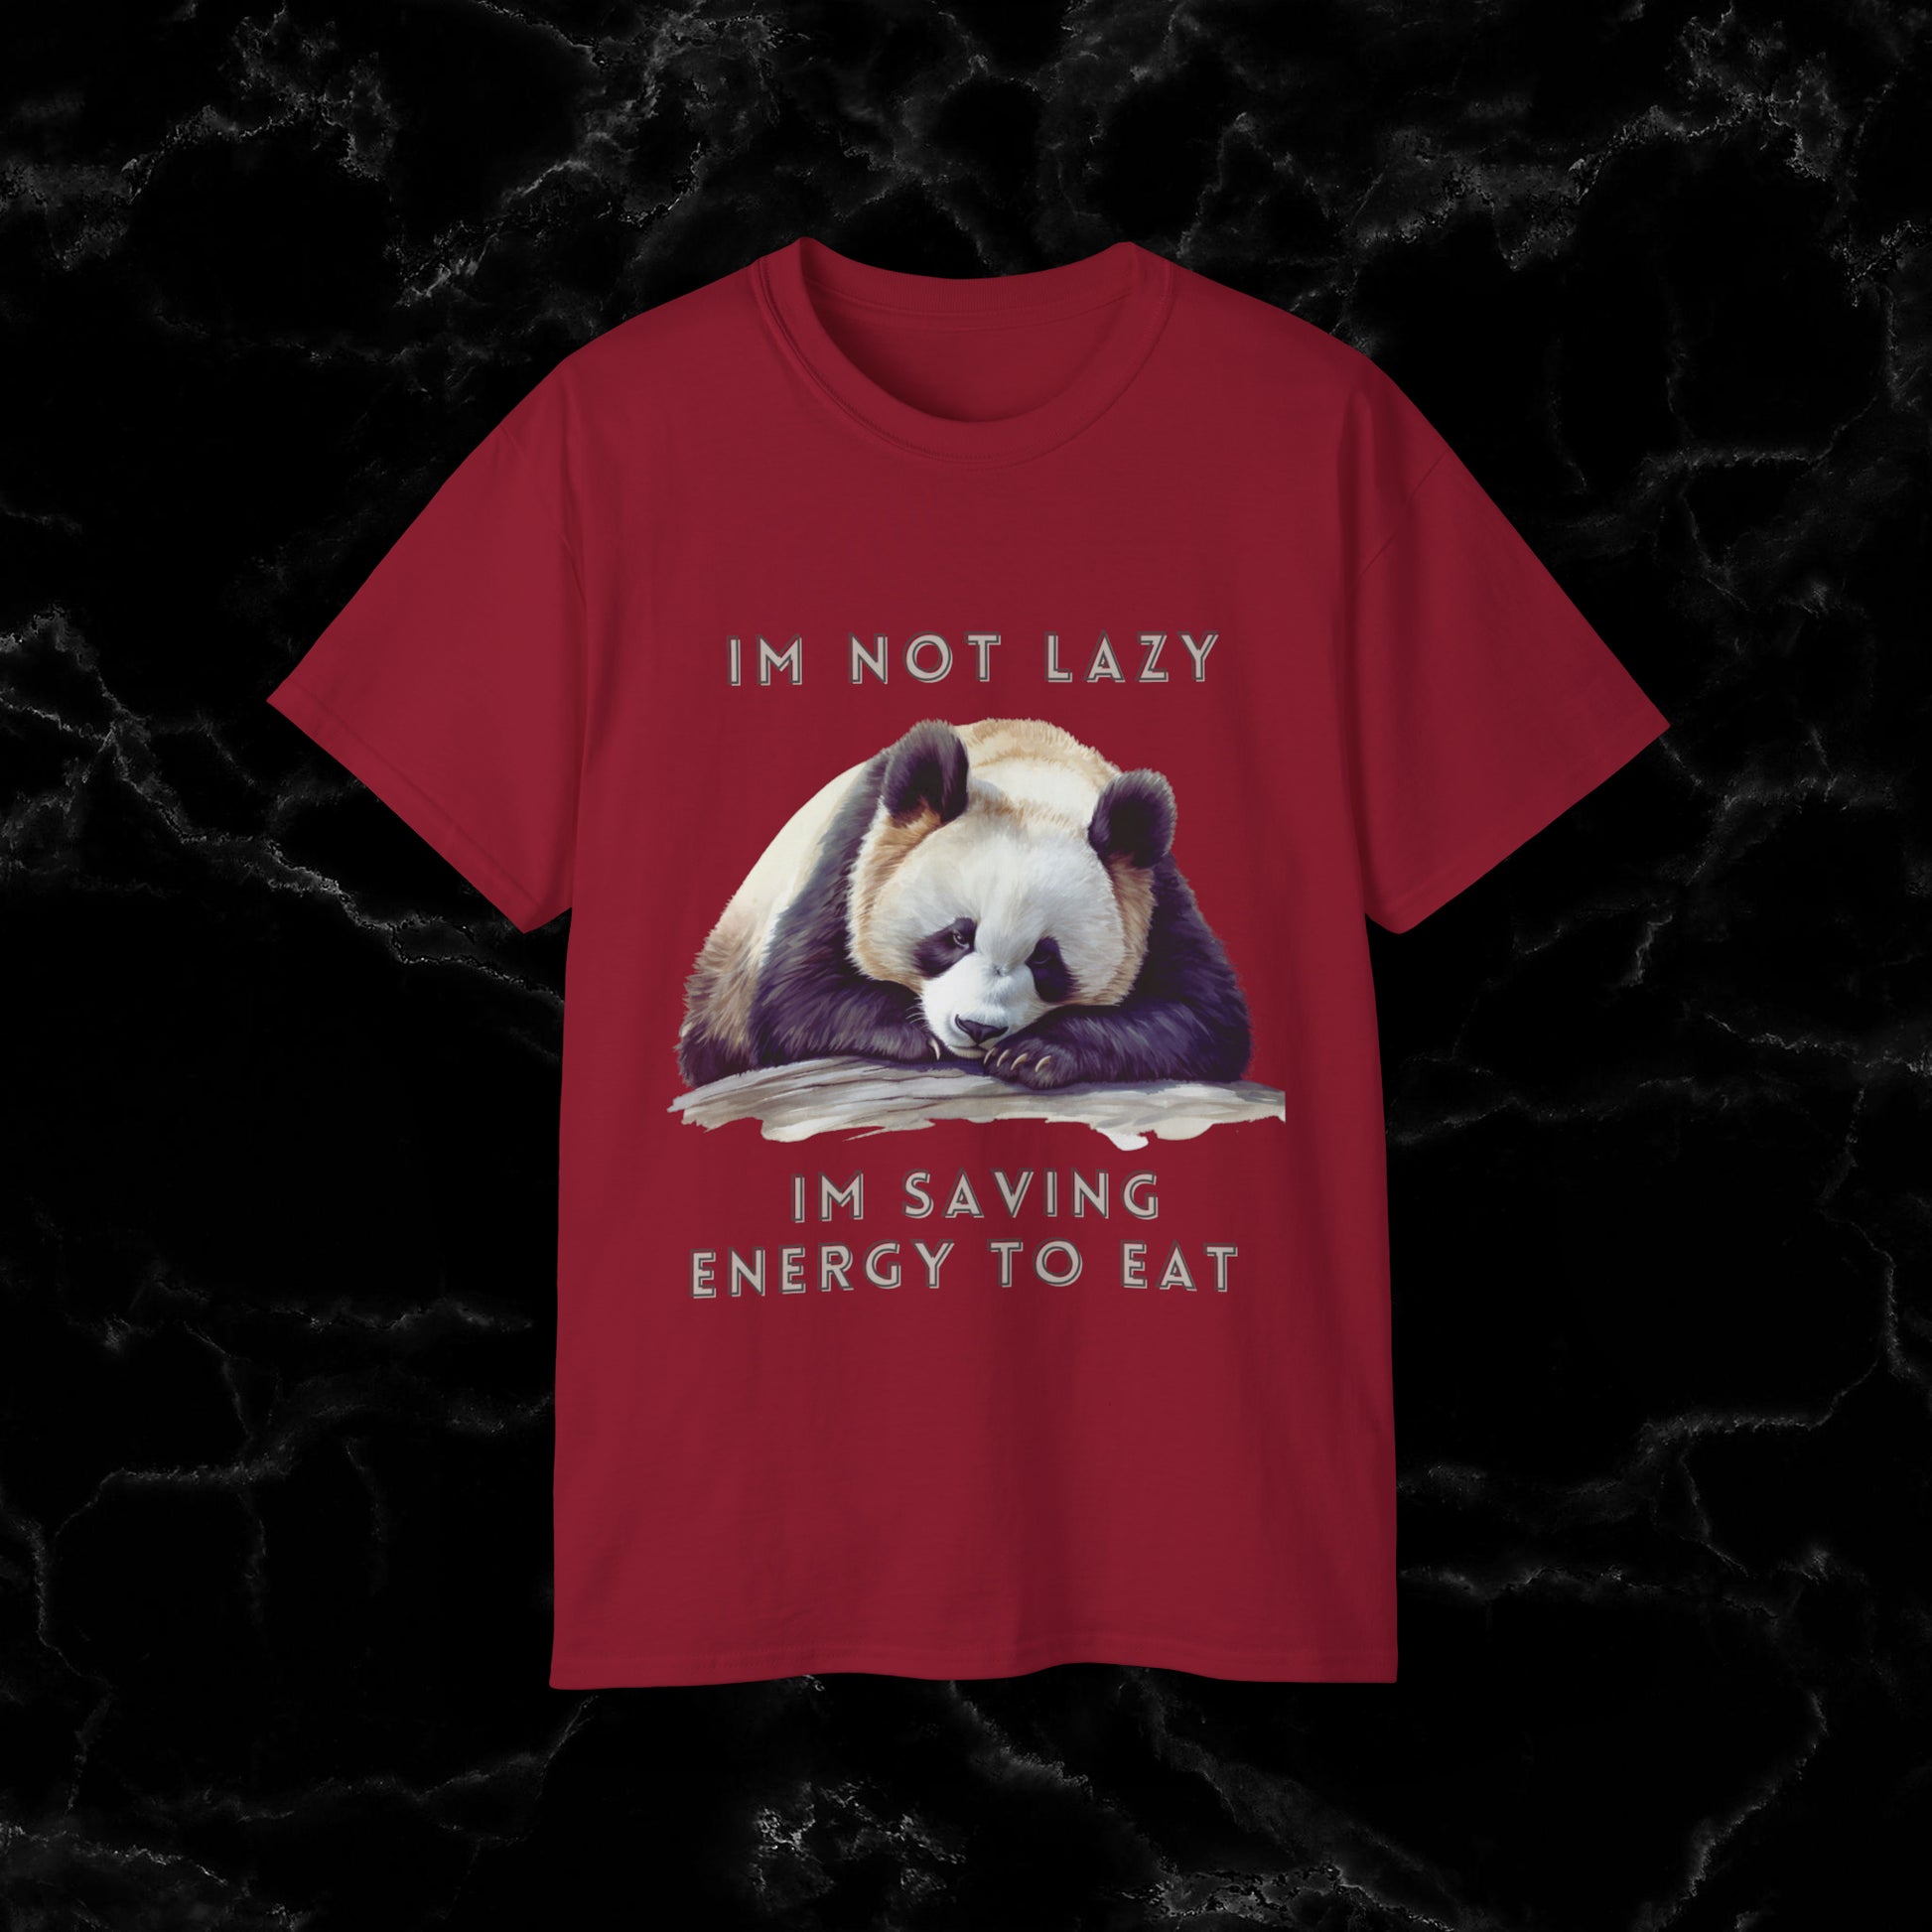 Nap Time Panda Unisex Funny Tee - Hilarious Panda Nap Design - I'm Not Lazy, I'm Saving Energy to Eat T-Shirt Cardinal Red S 